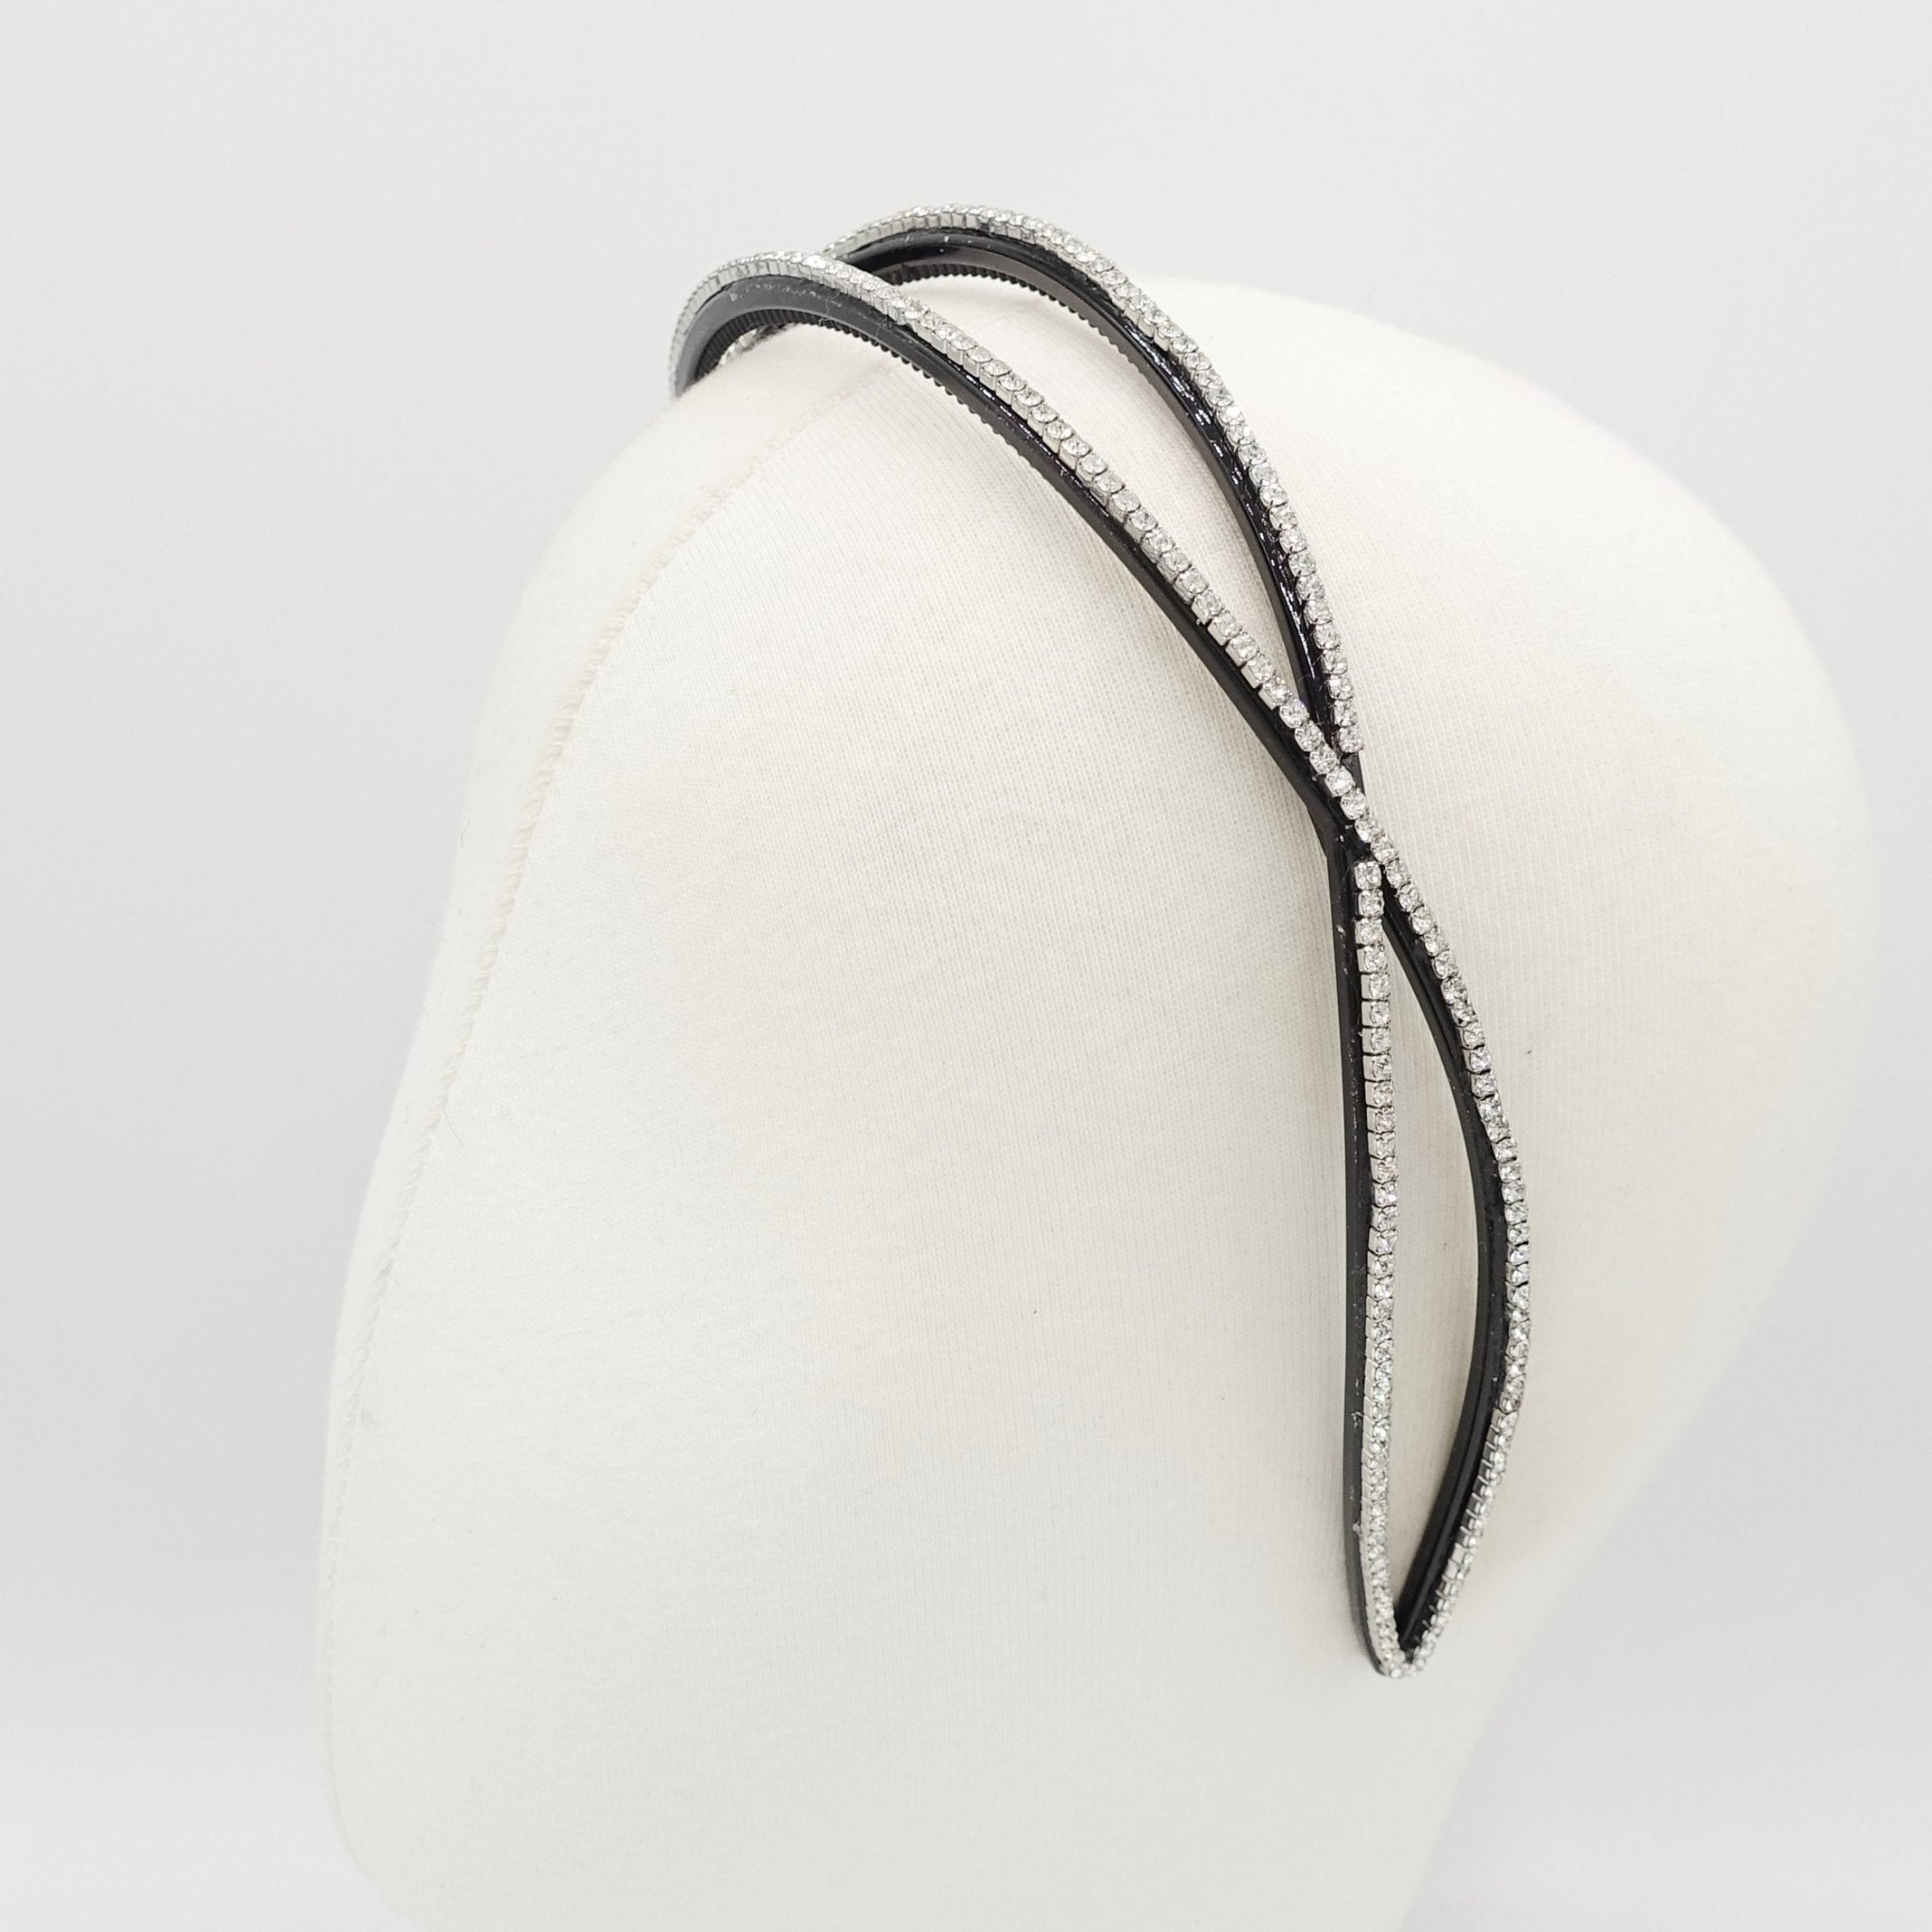 VeryShine double cross headband rhinestone chain embellished acrylic double hairband woman hair accessory